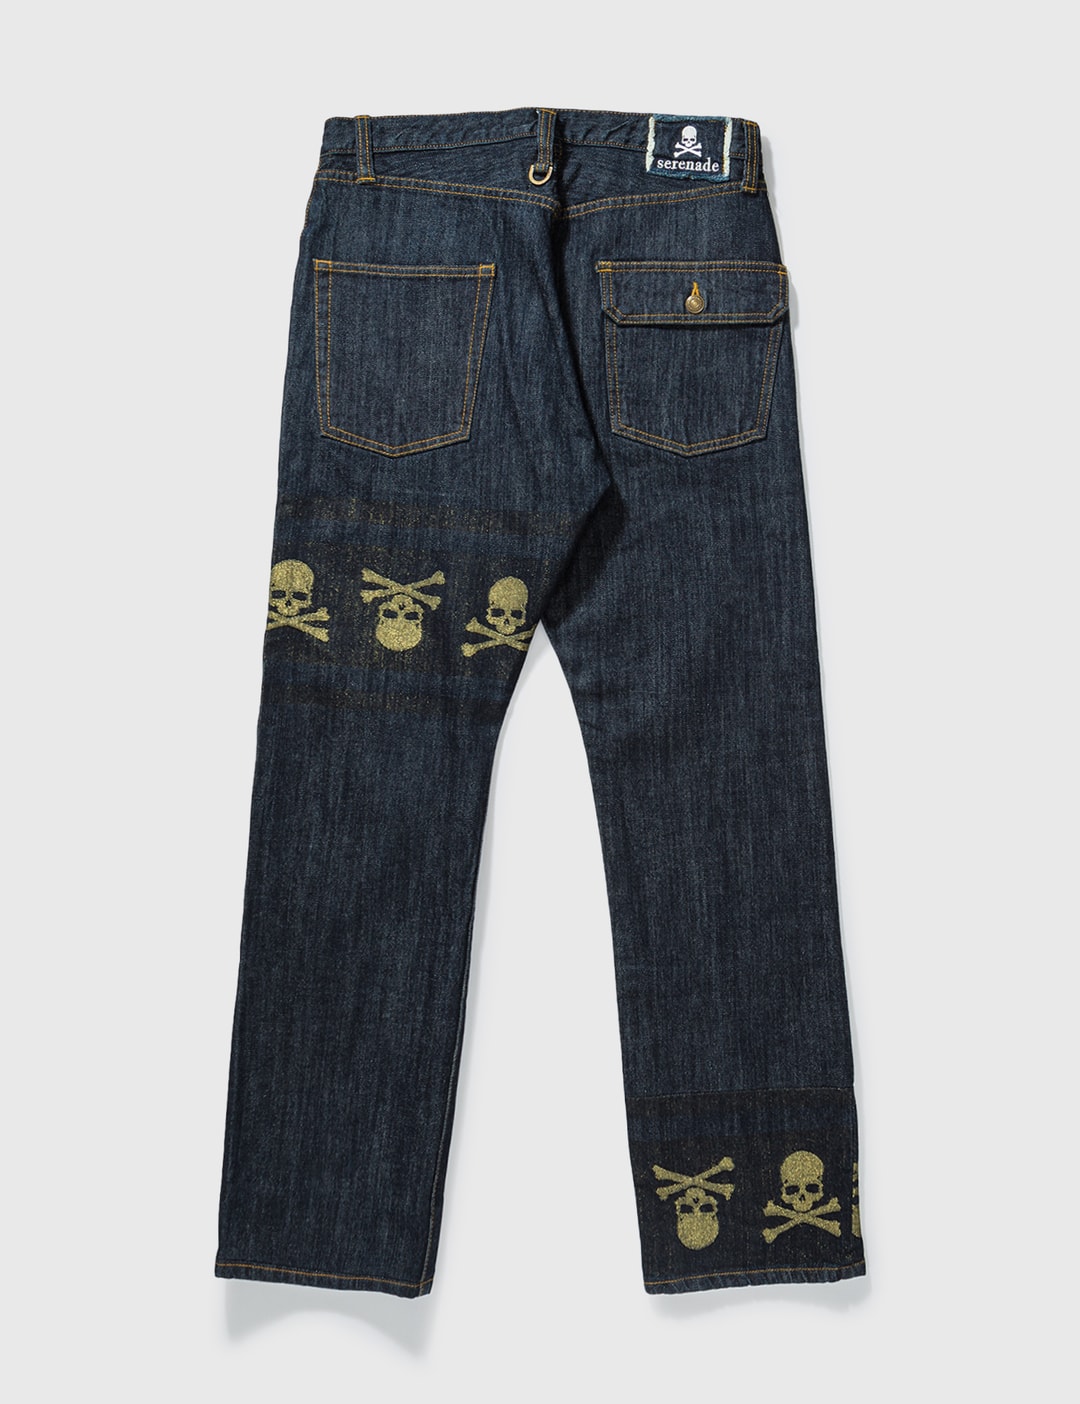 Mastermind Japan - Mastermind Japan Unwashed Gold Skull Jeans | HBX ...